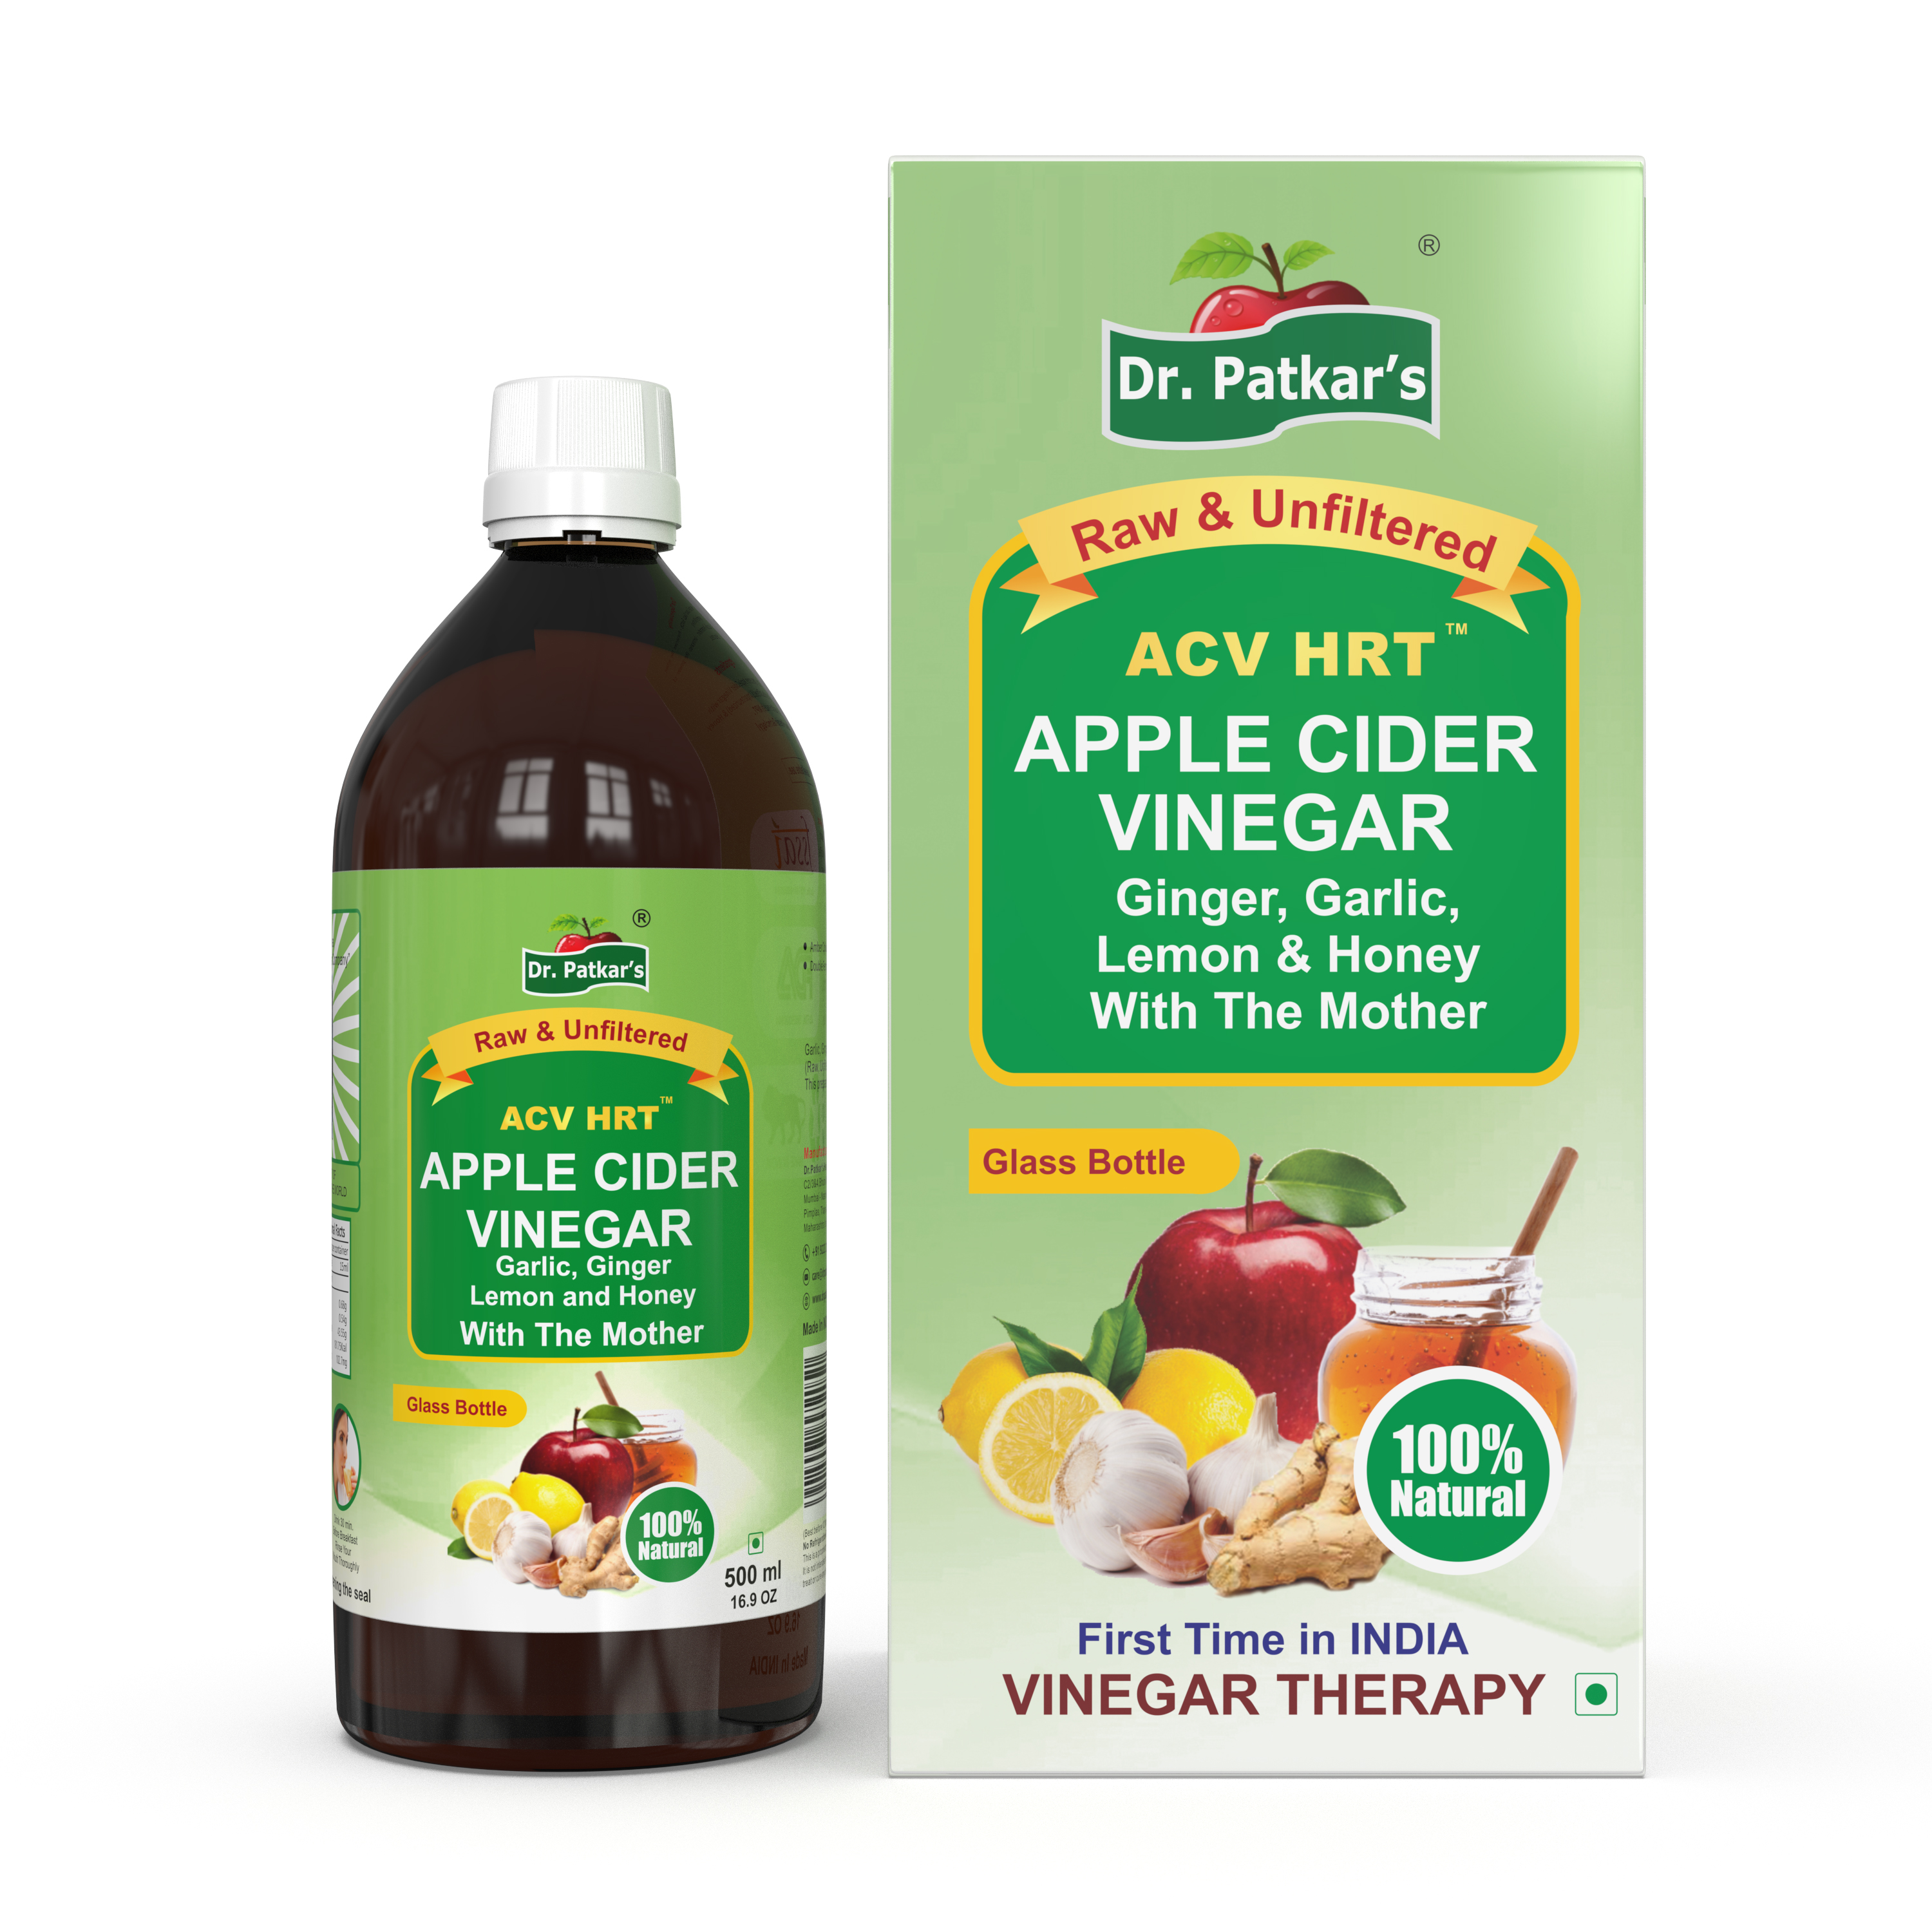 Buy Dr. Patkar's Apple Cider Vinegar with Ginger, Garlic, Lemon & Honey at Best Price Online